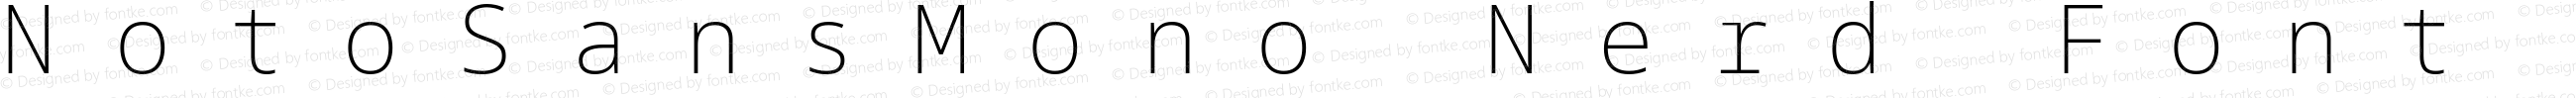 Noto Sans Mono ExtraLight Nerd Font Complete Mono